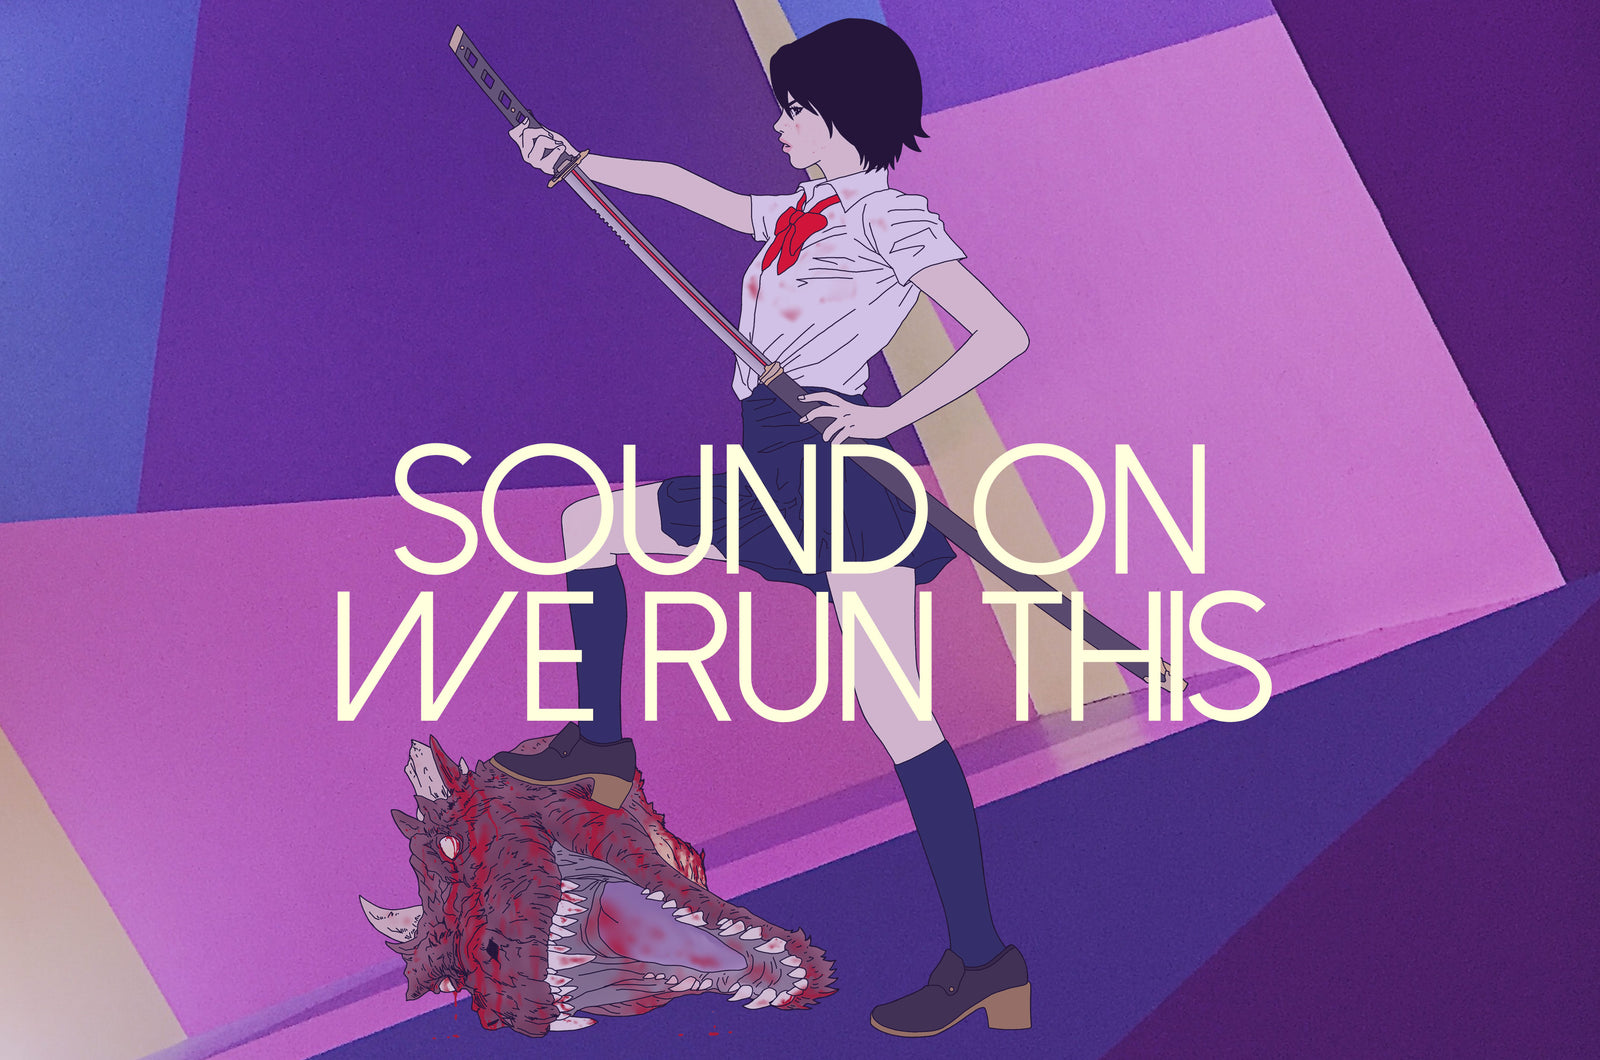 Sound On - We Run This